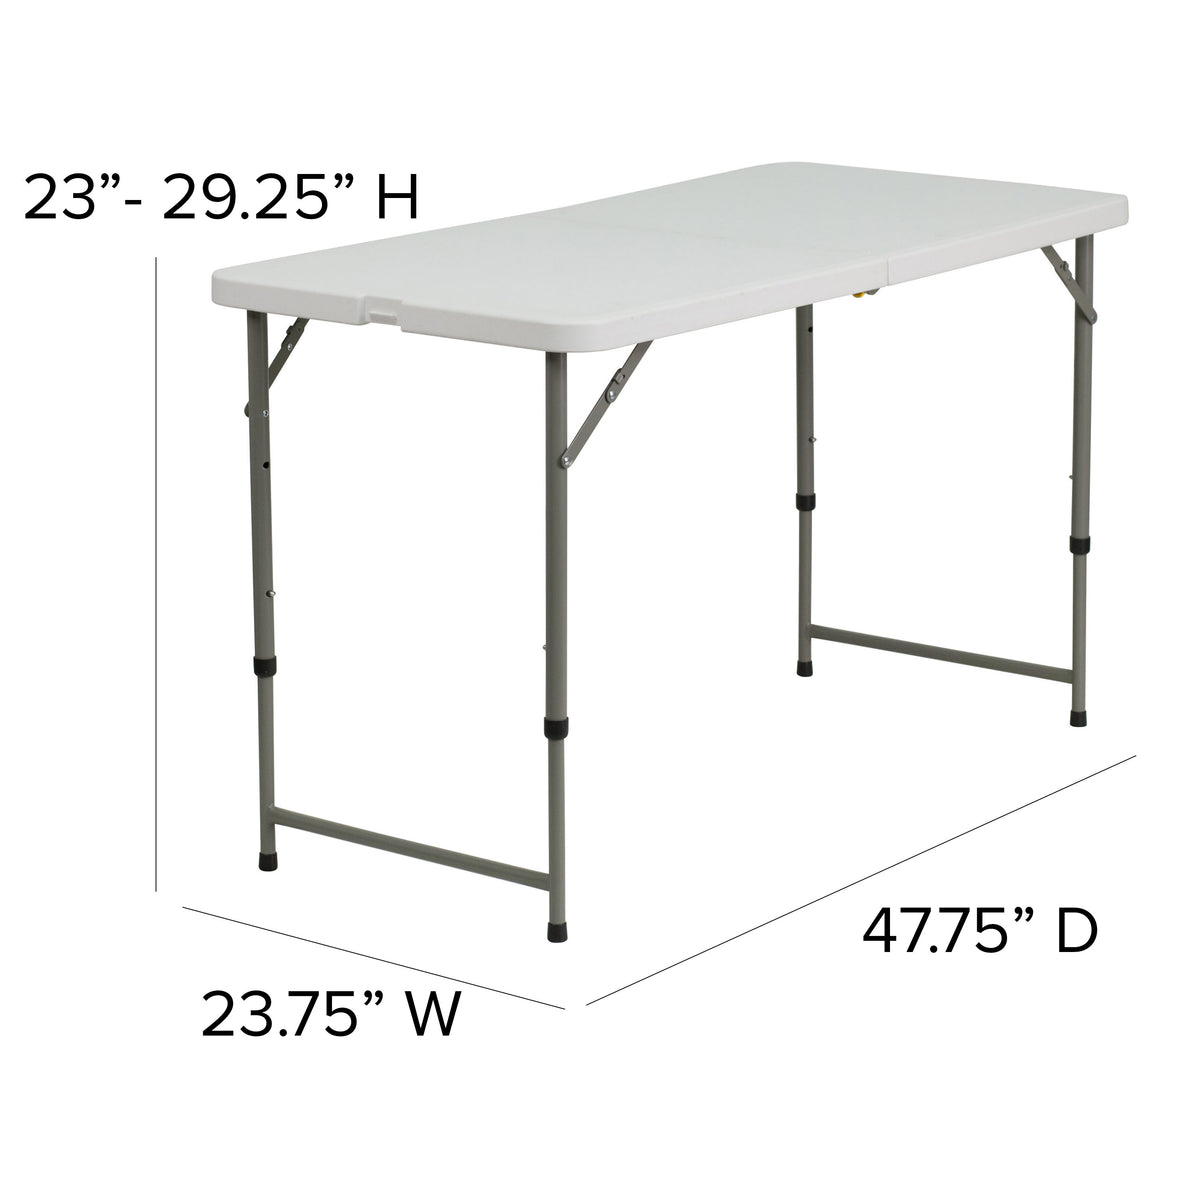 4-Foot Height Adjustable Bi-Fold White Plastic Folding Table w/ Handle